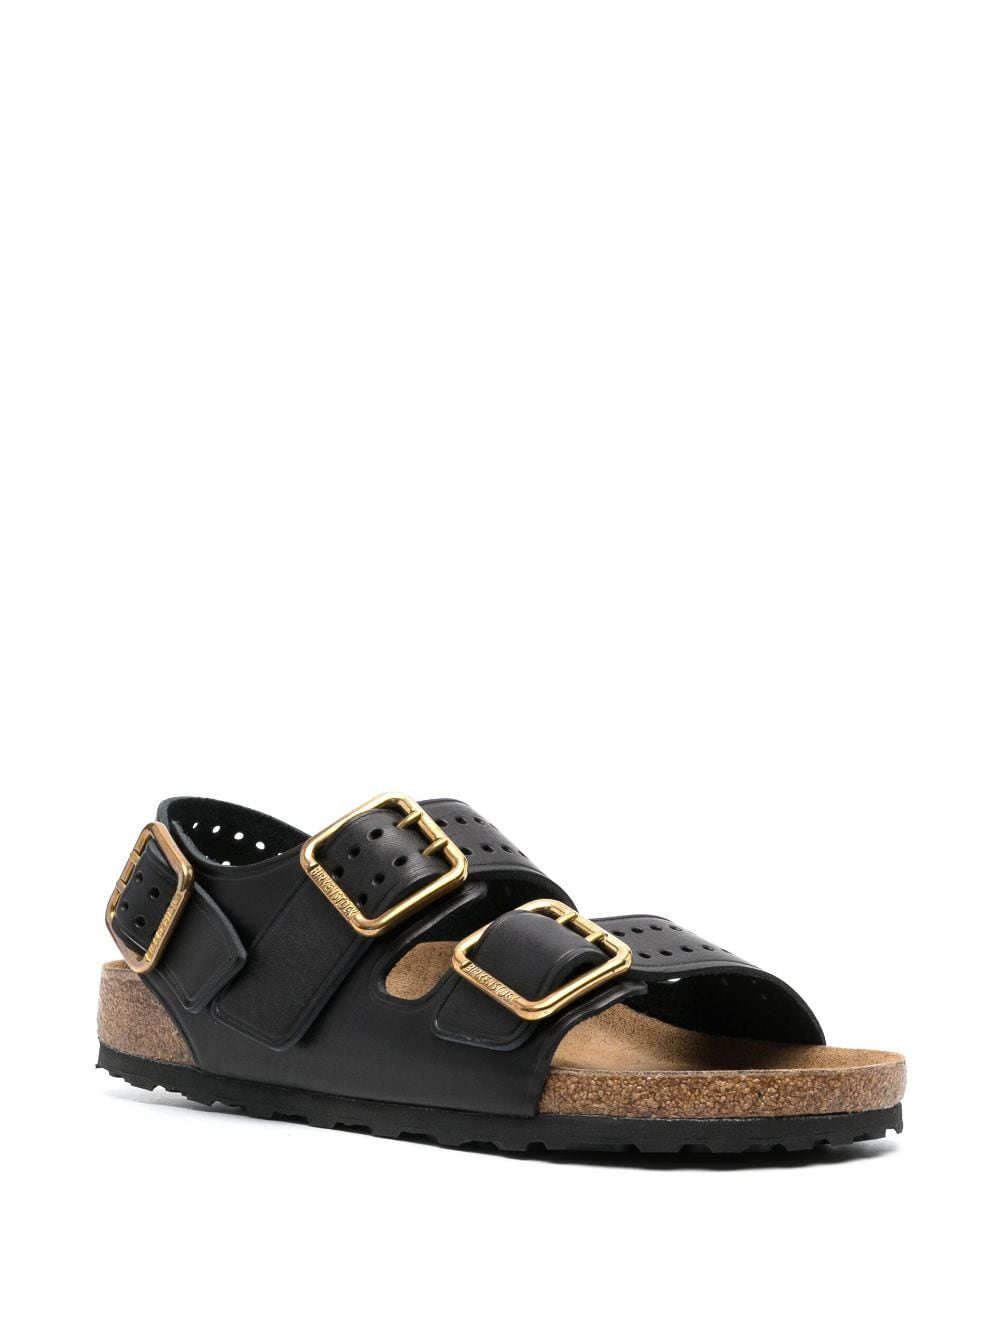 Birkenstock buckled leather sandals - Zwart